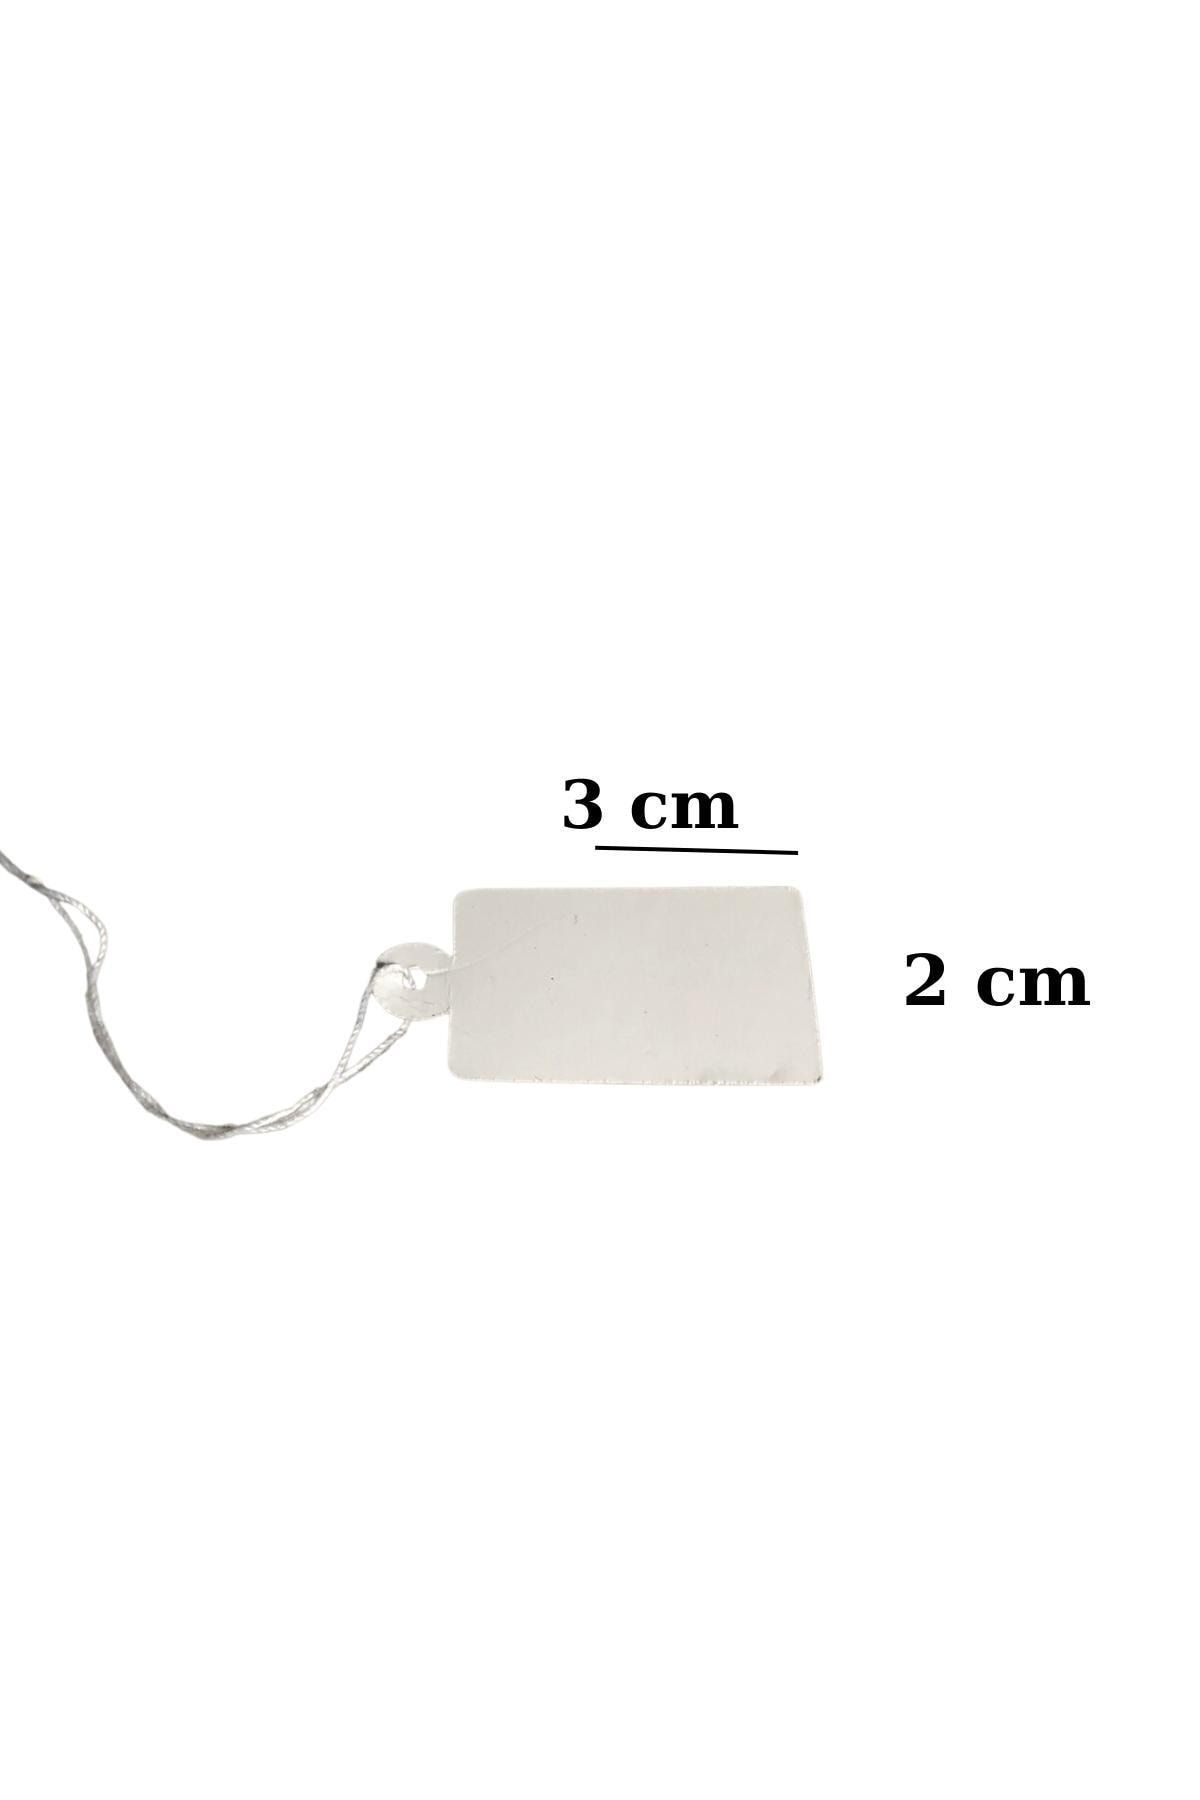 ÖZER KUTU Karton Ipli Beyaz Fiyat Etiketi 80 Li Mega (2 X 3 Cm )